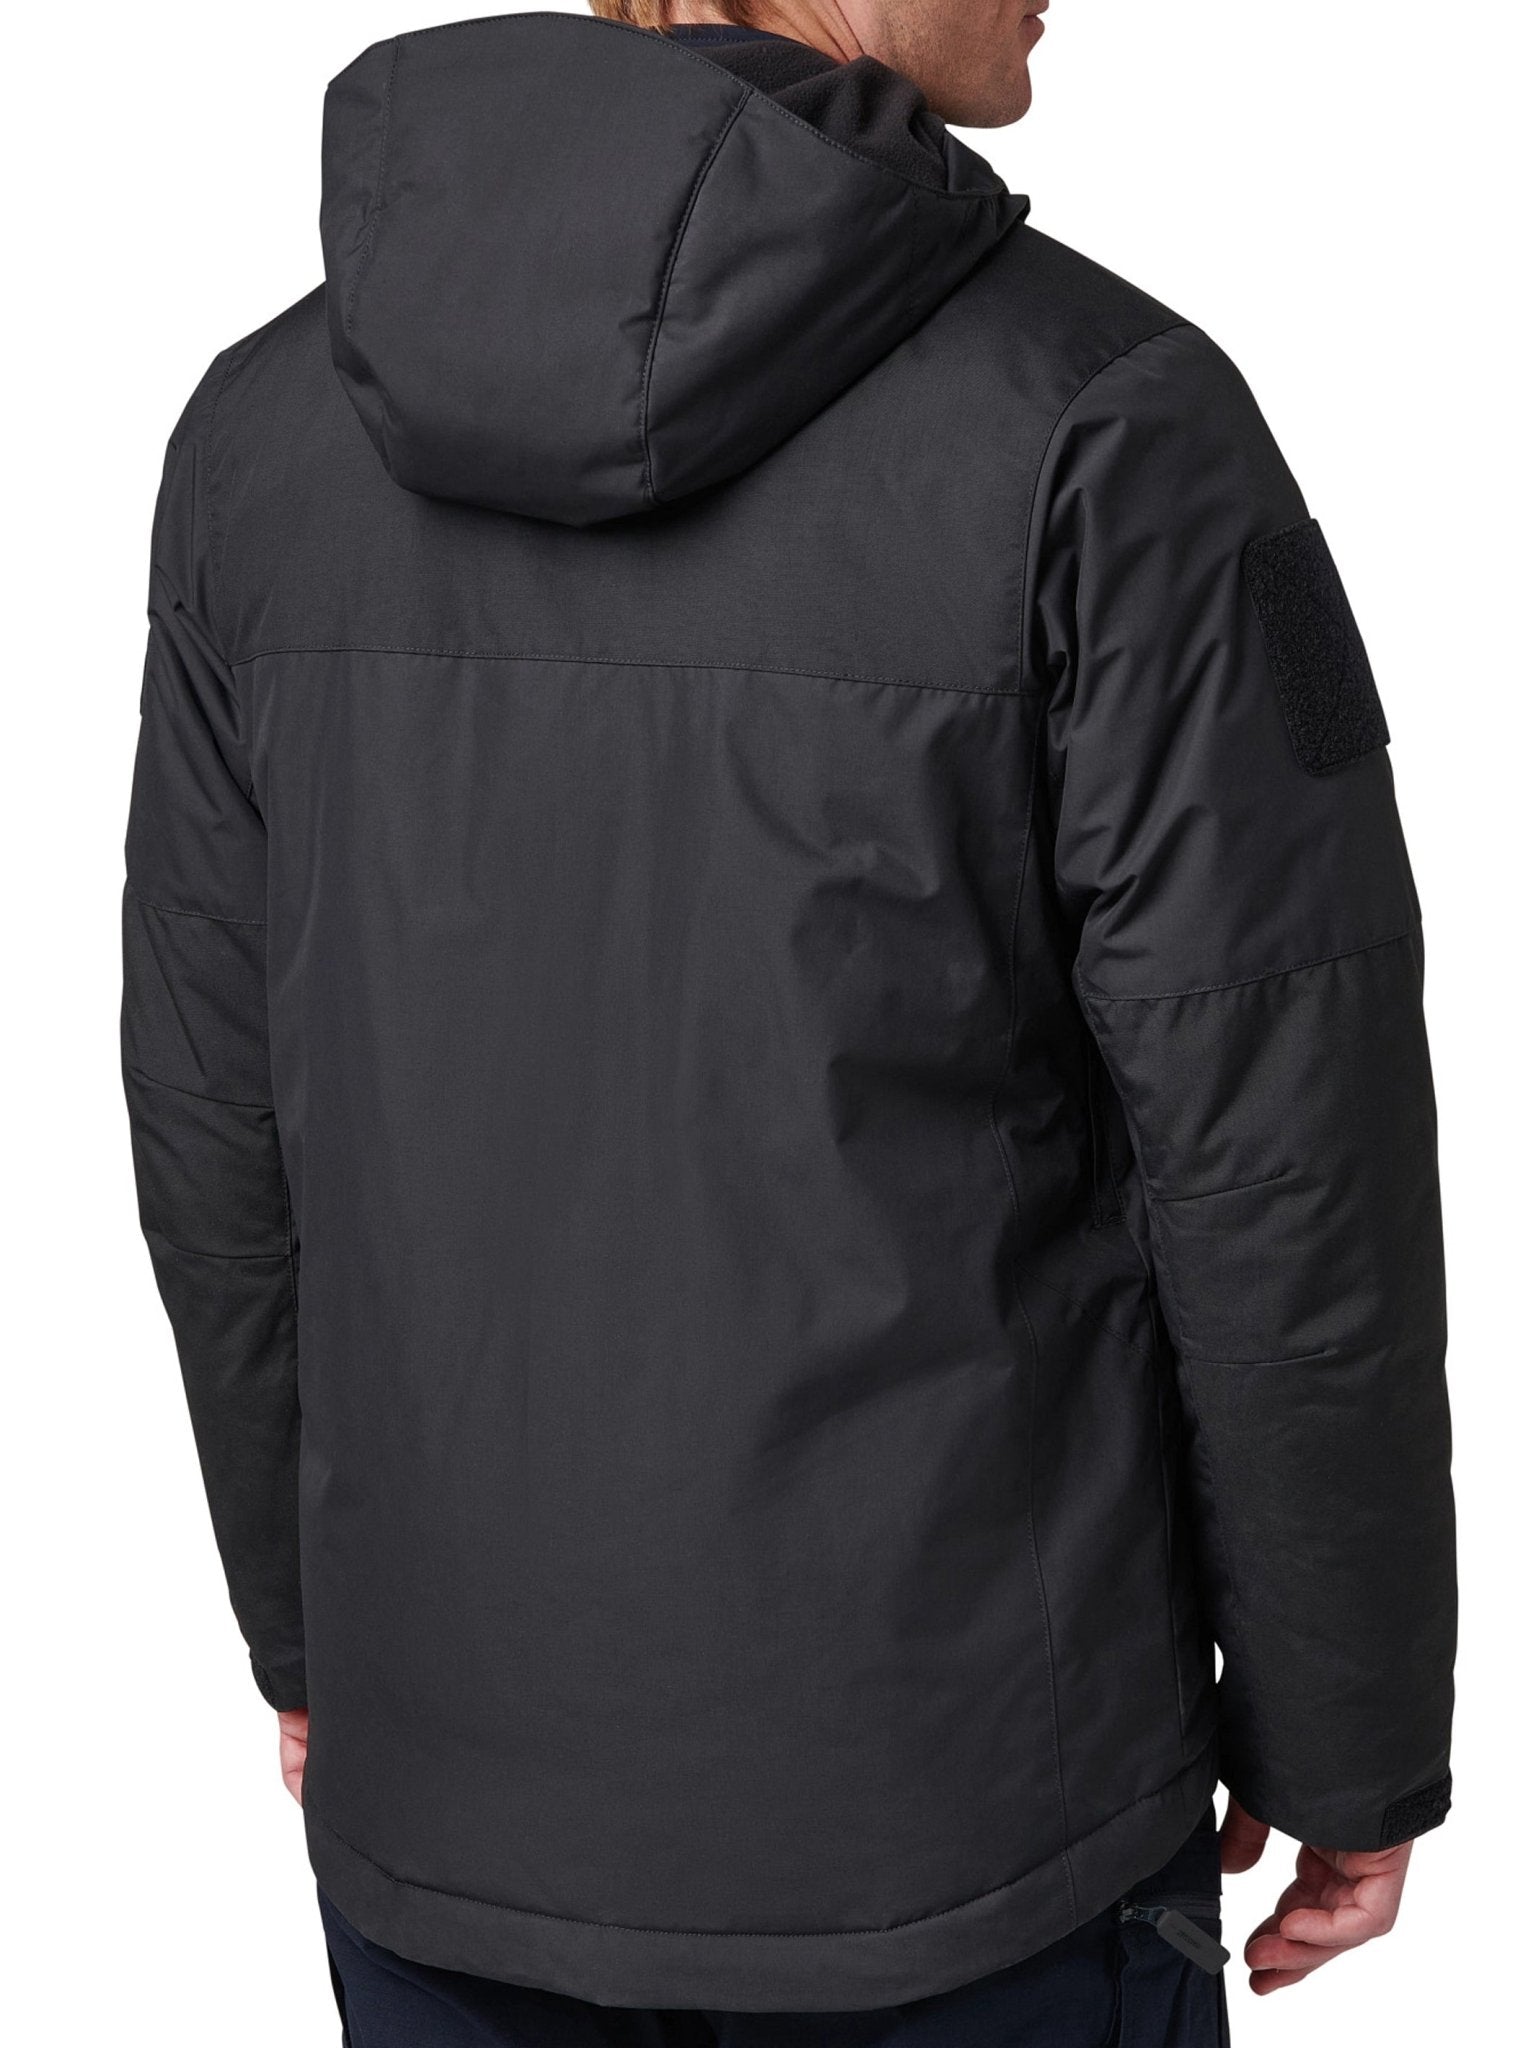 4elementsclothing5.11 Tactical5.11 Tactical - Waterproof & Breathable Bastion Jacket - With Primaloft DWR coatedCoats & Jackets48374-019-S